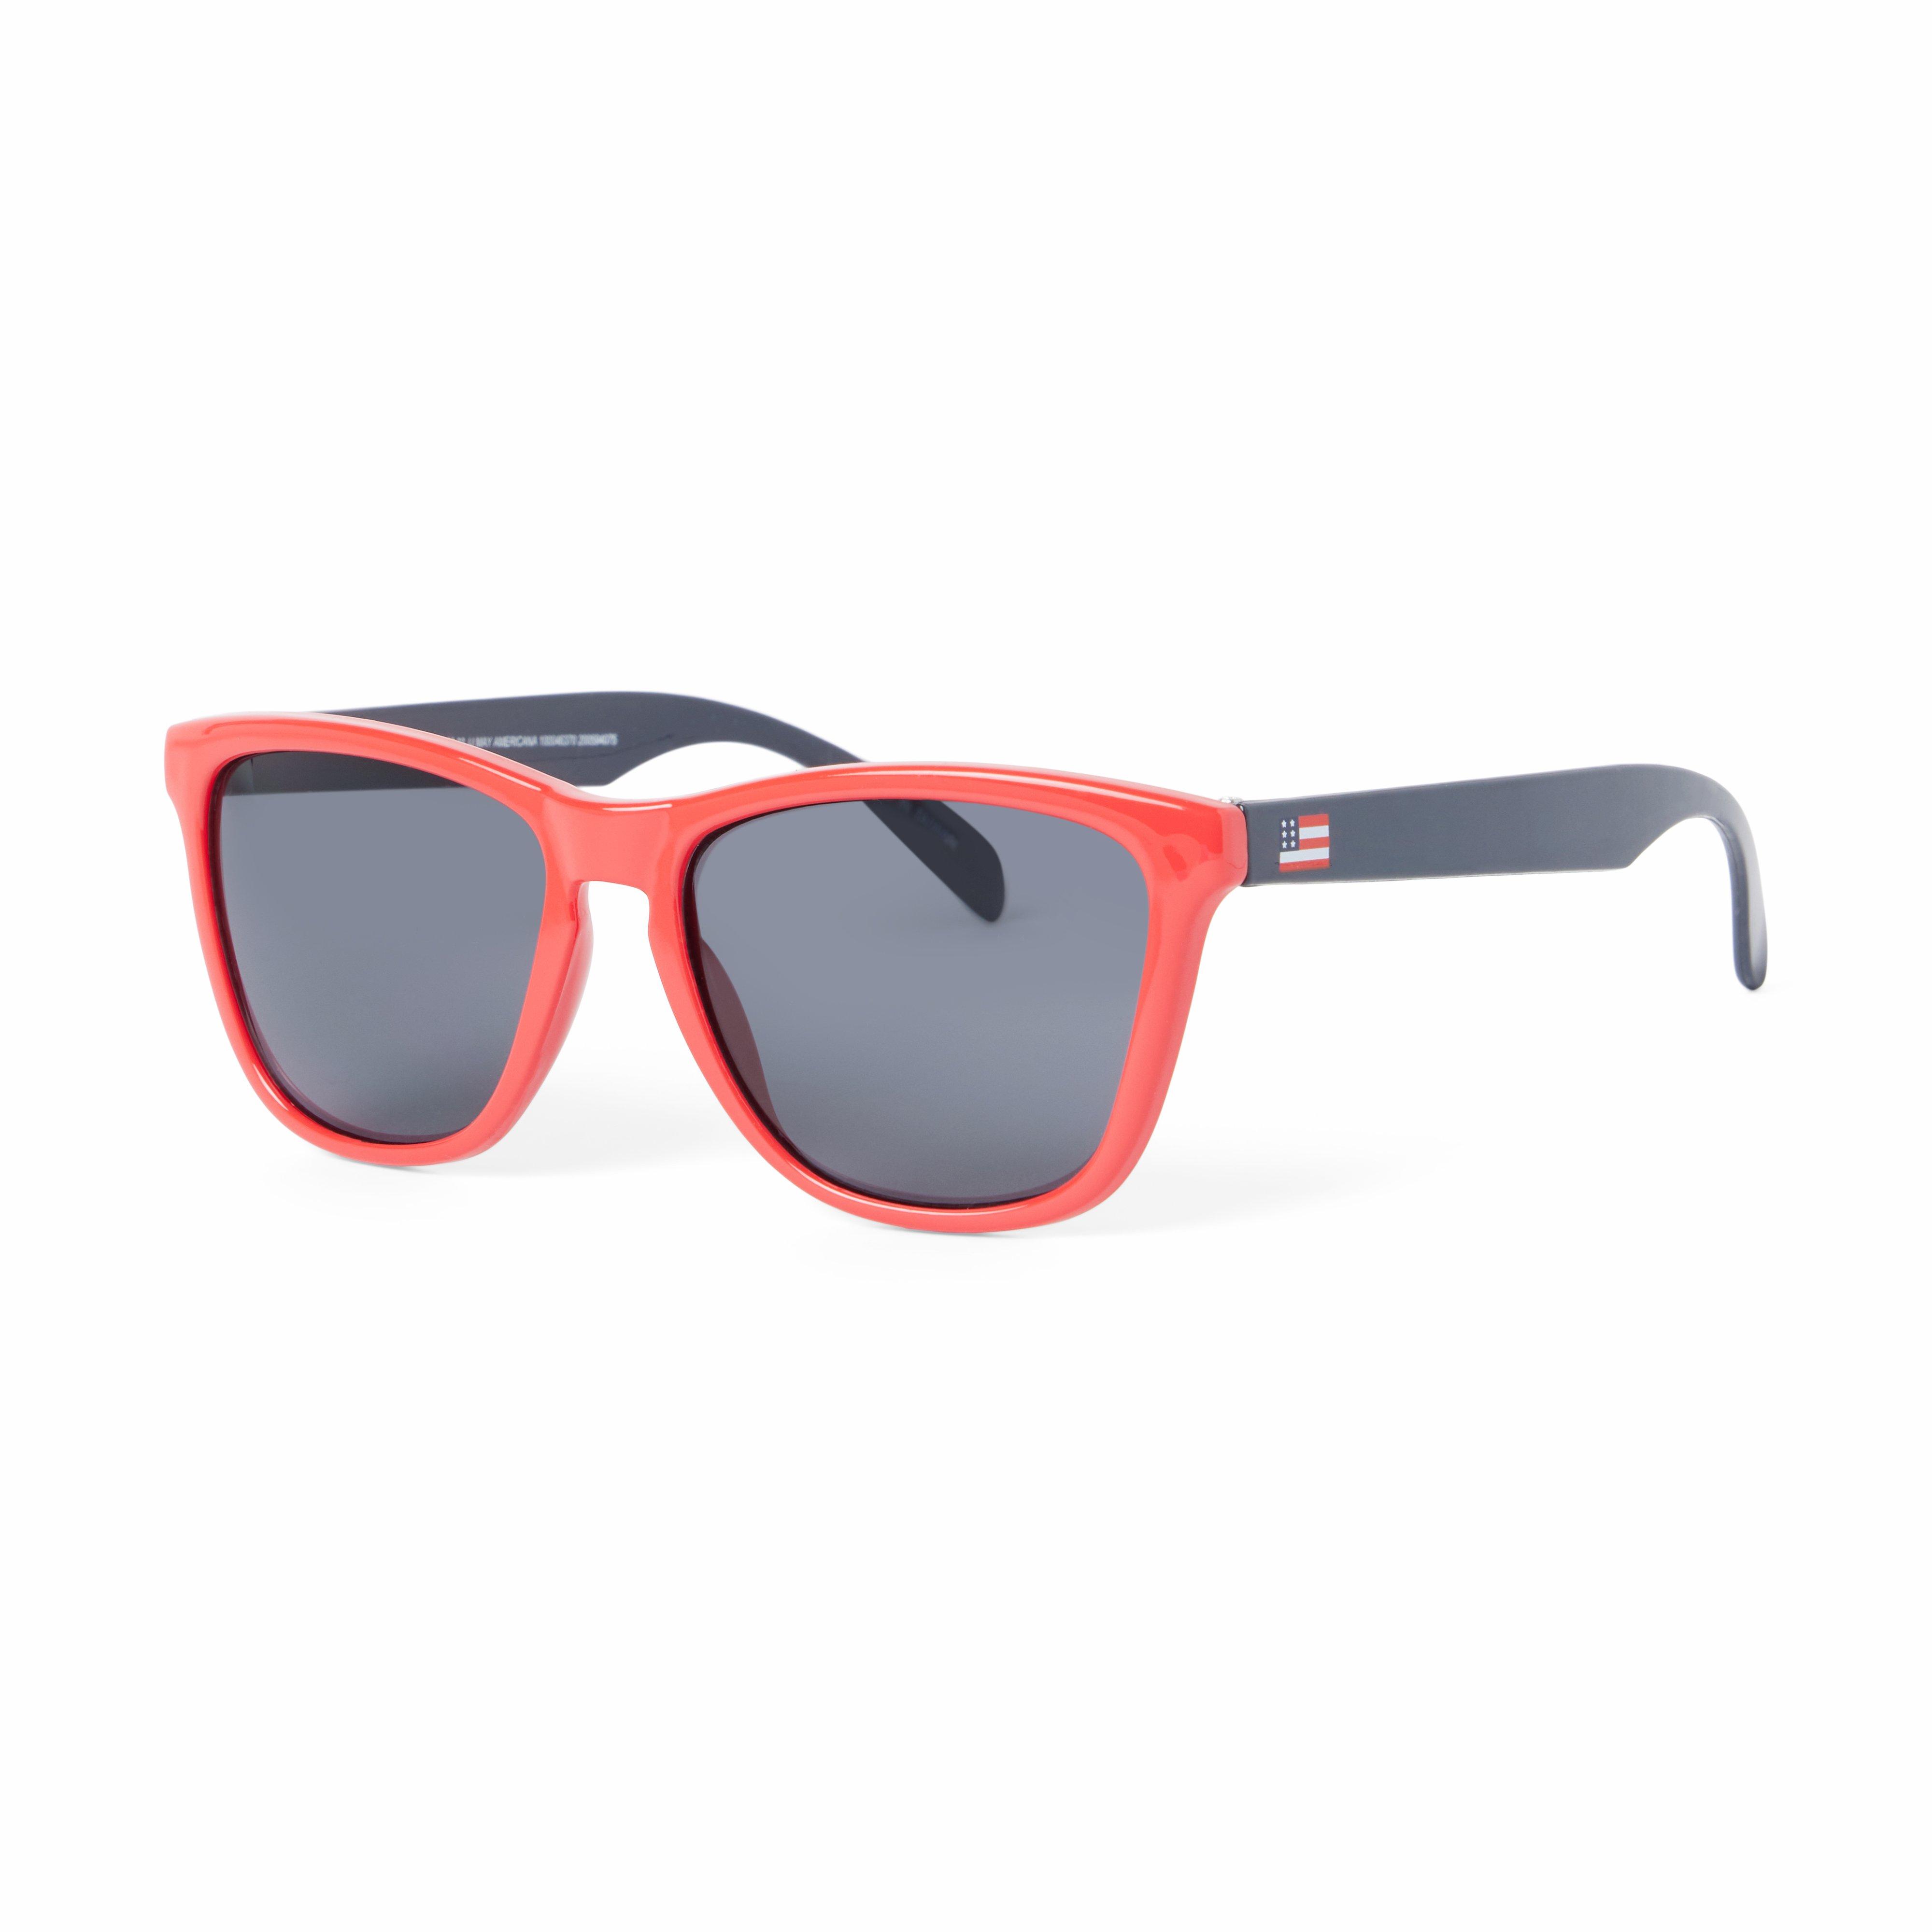 Americana Colorblocked Sunglasses